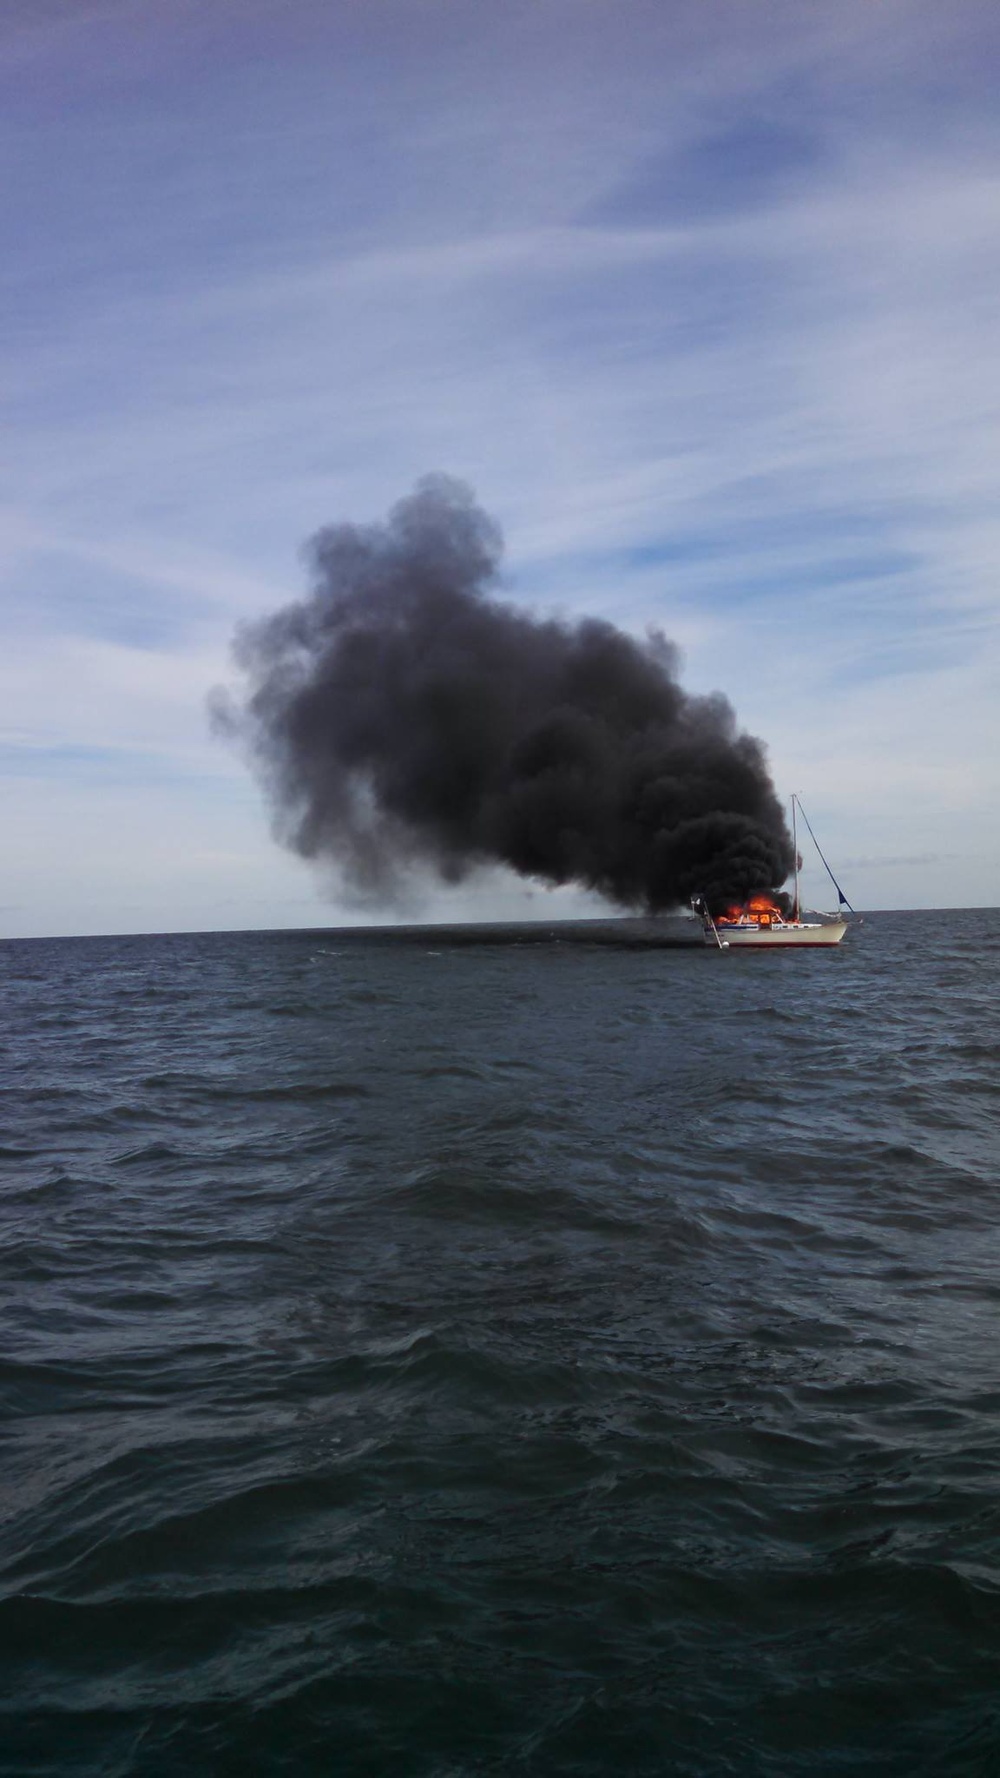 Coast Guard, good Samaritan rescue boater from boat fire